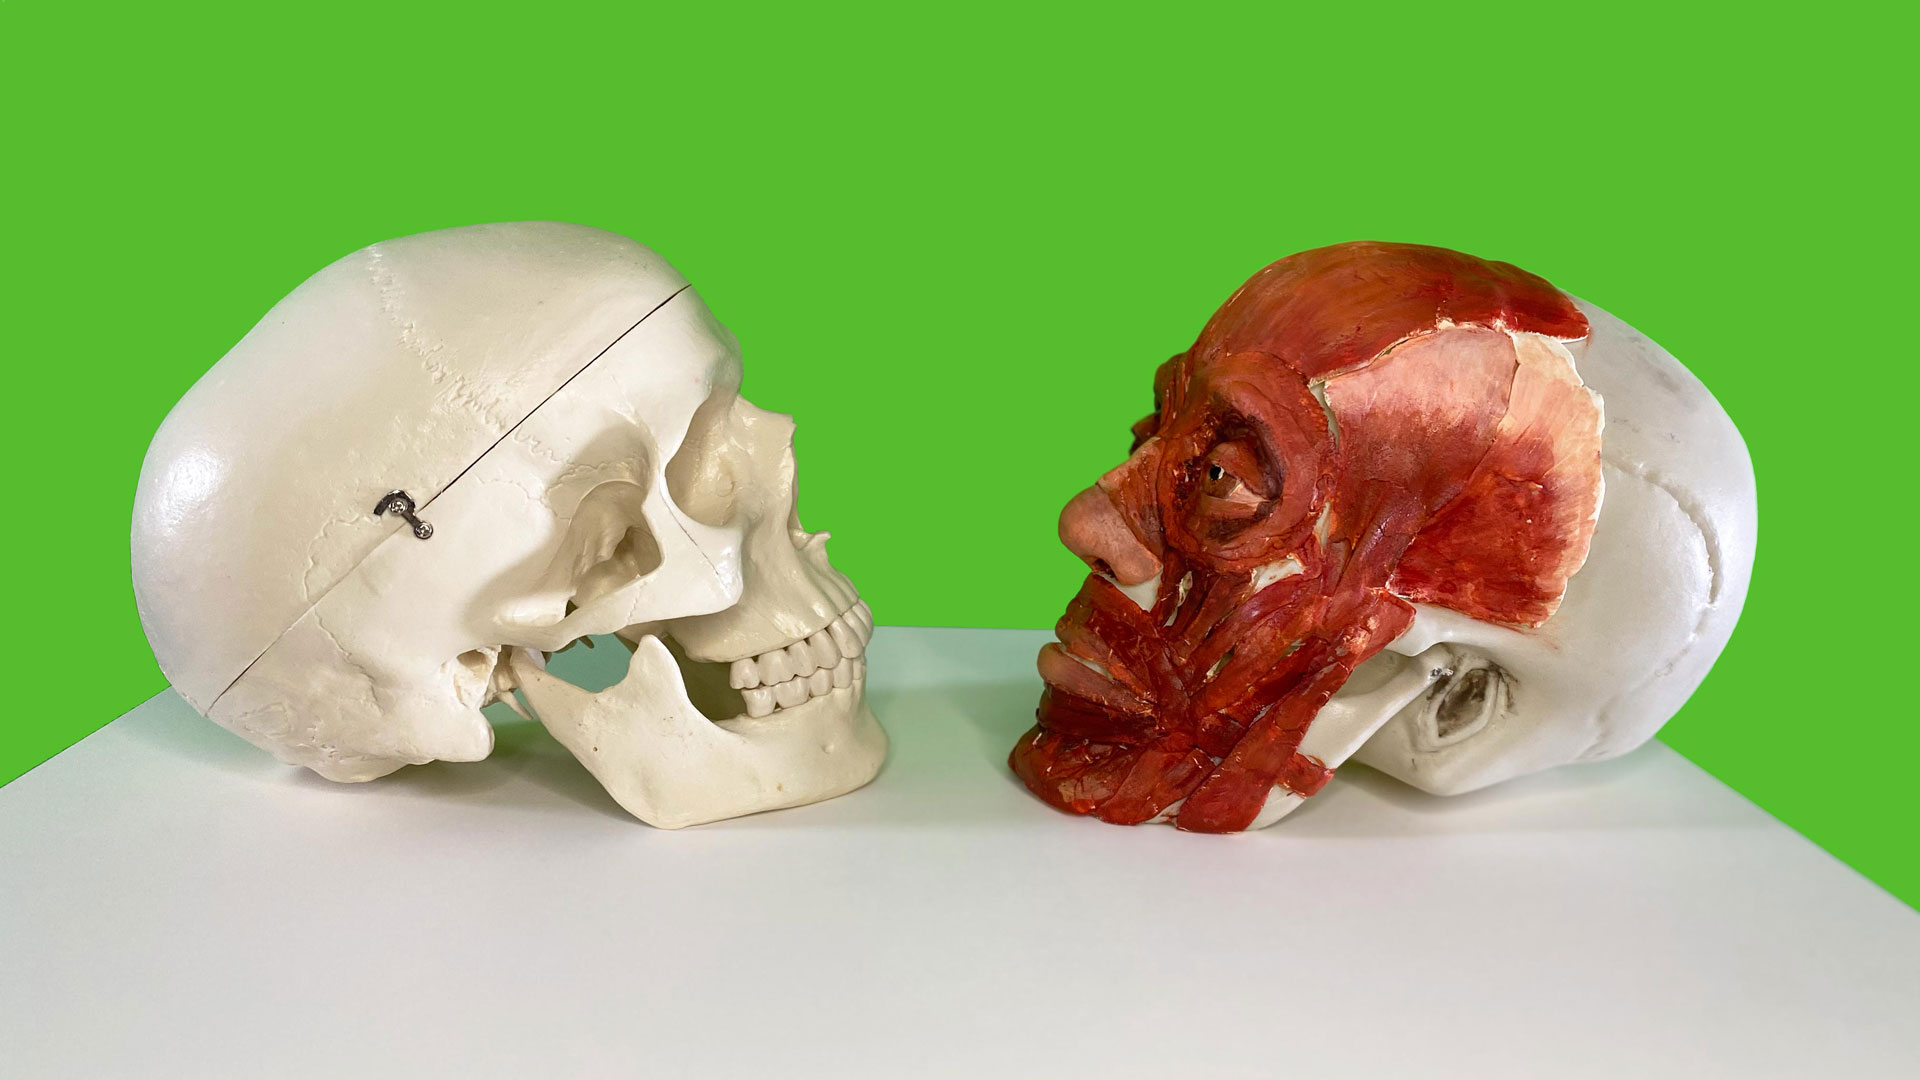 Resin skull replica facing replica of musculature of the human face